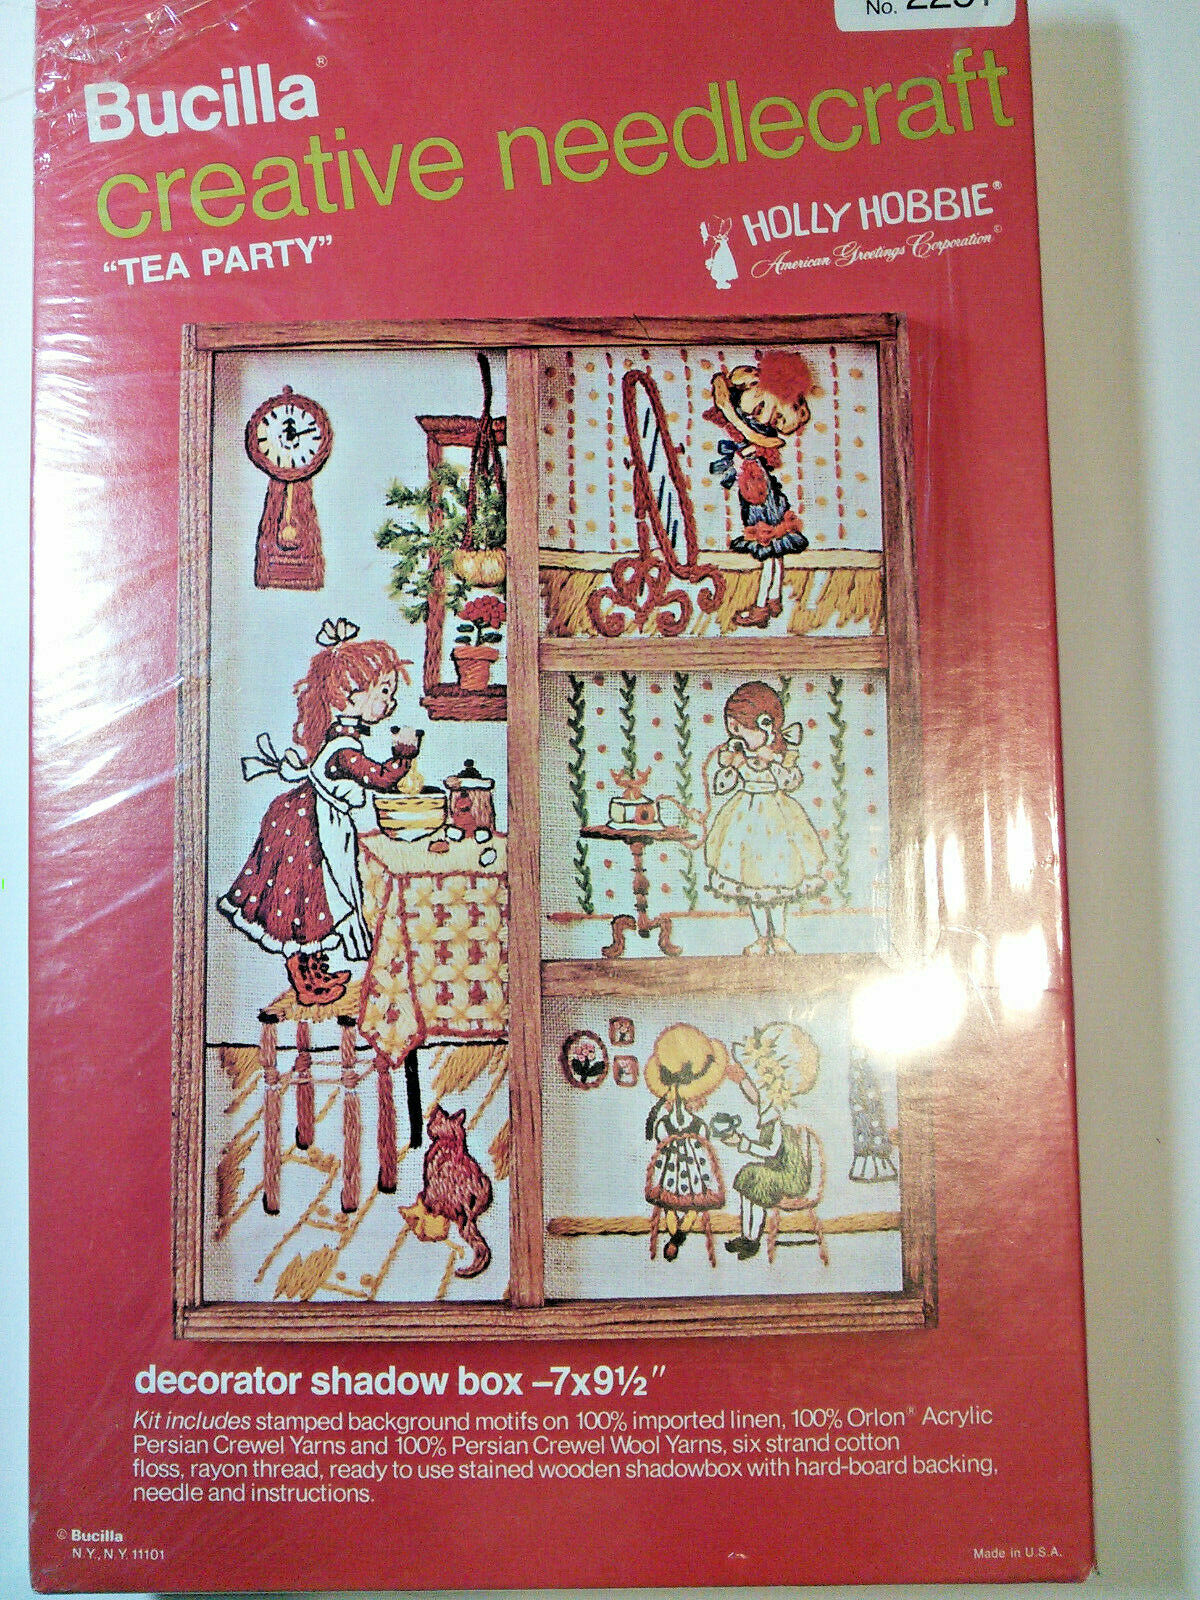 Bucilla Holly Hobbie "tea Party" Decorator Shadow Box Crewel Kit